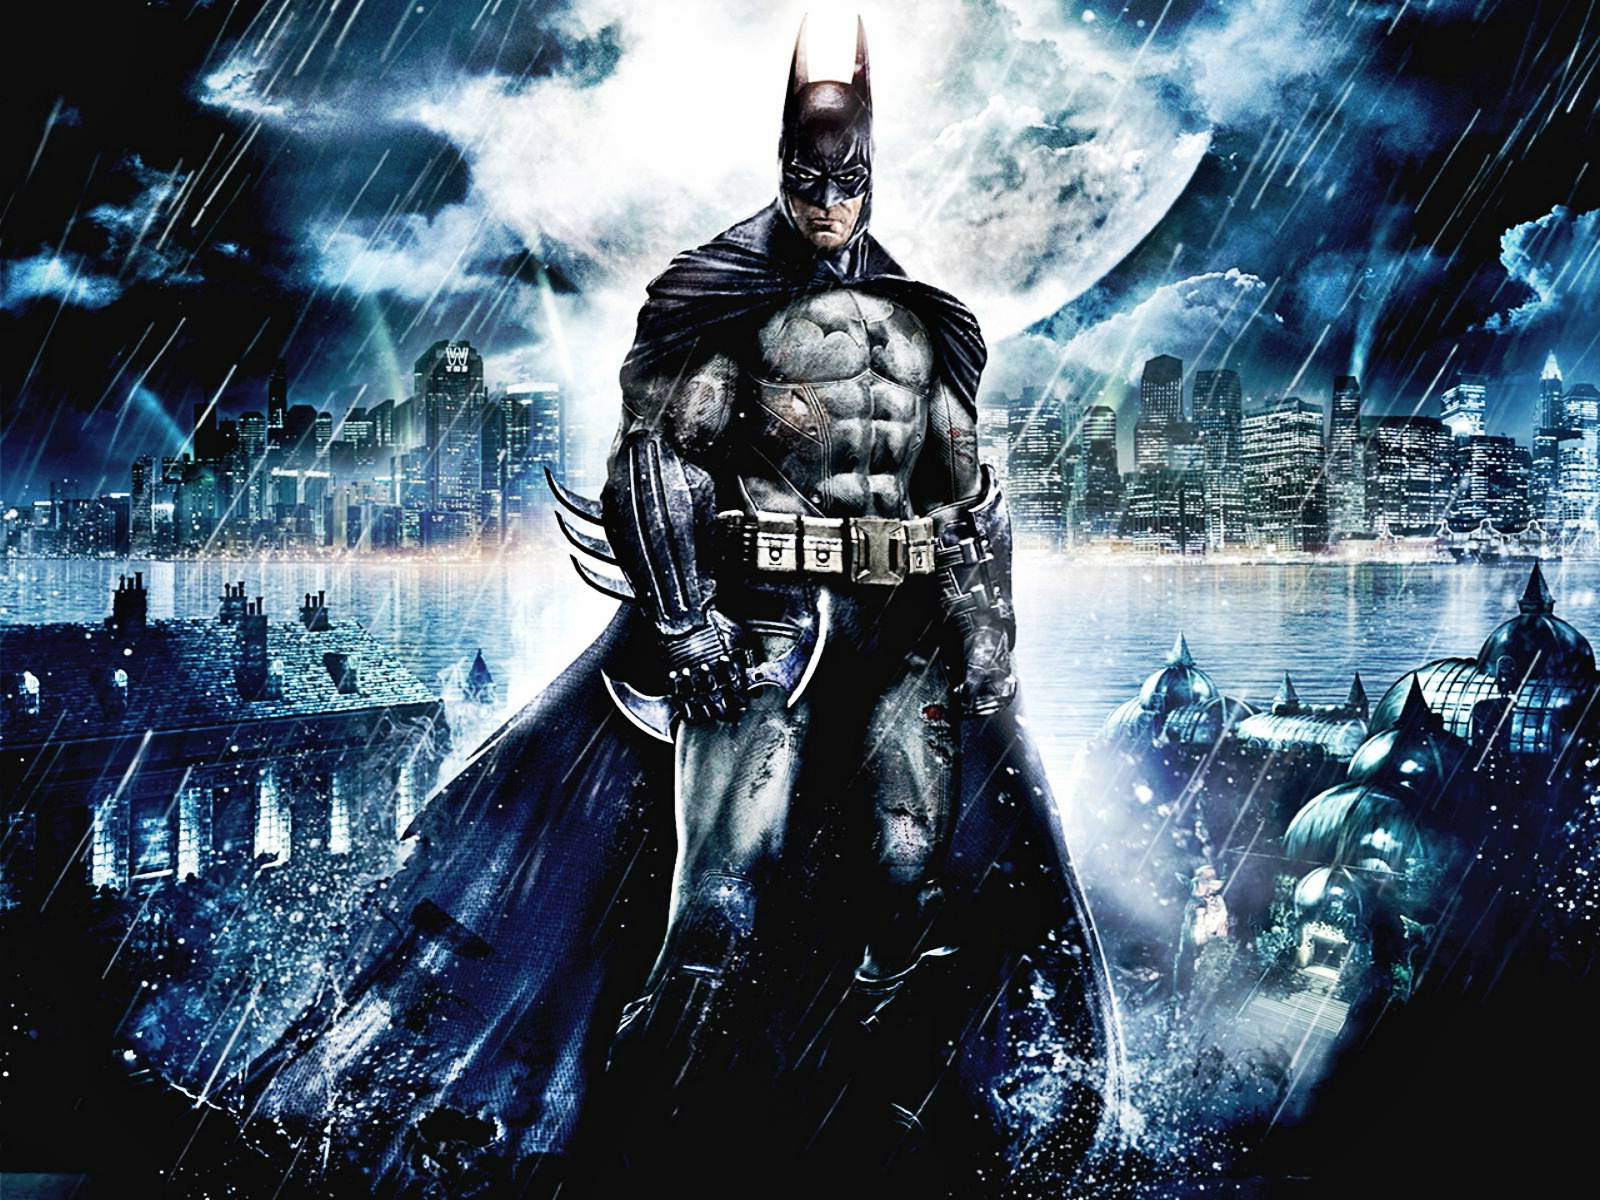 batman dunkle tapete,batman,action adventure spiel,erfundener charakter,superheld,film